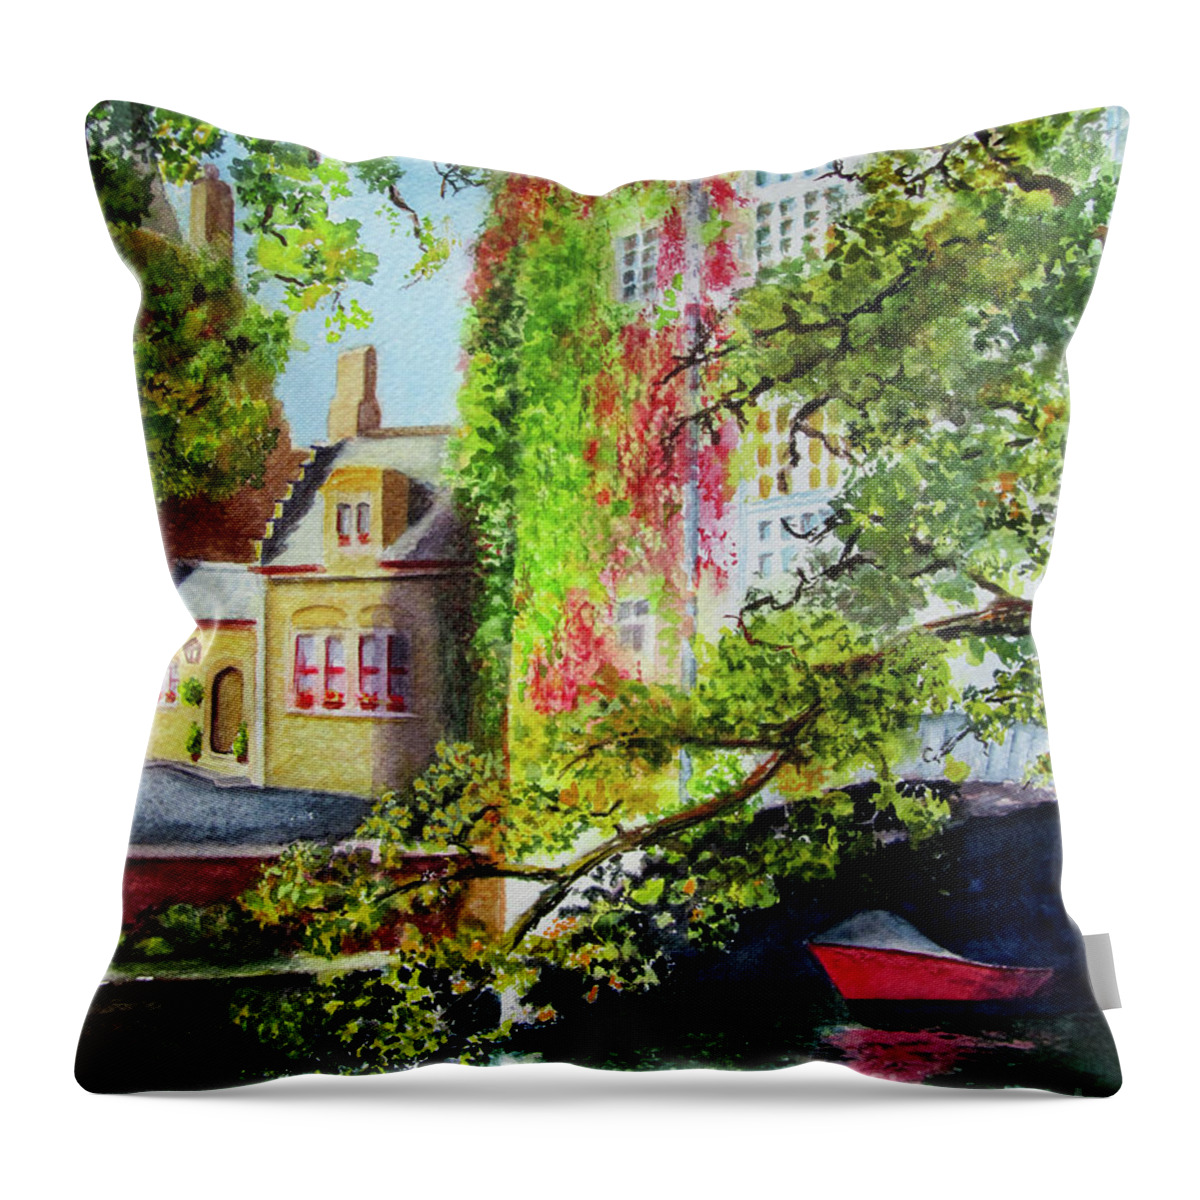 Bruges Throw Pillow featuring the painting Hiding by Karen Fleschler